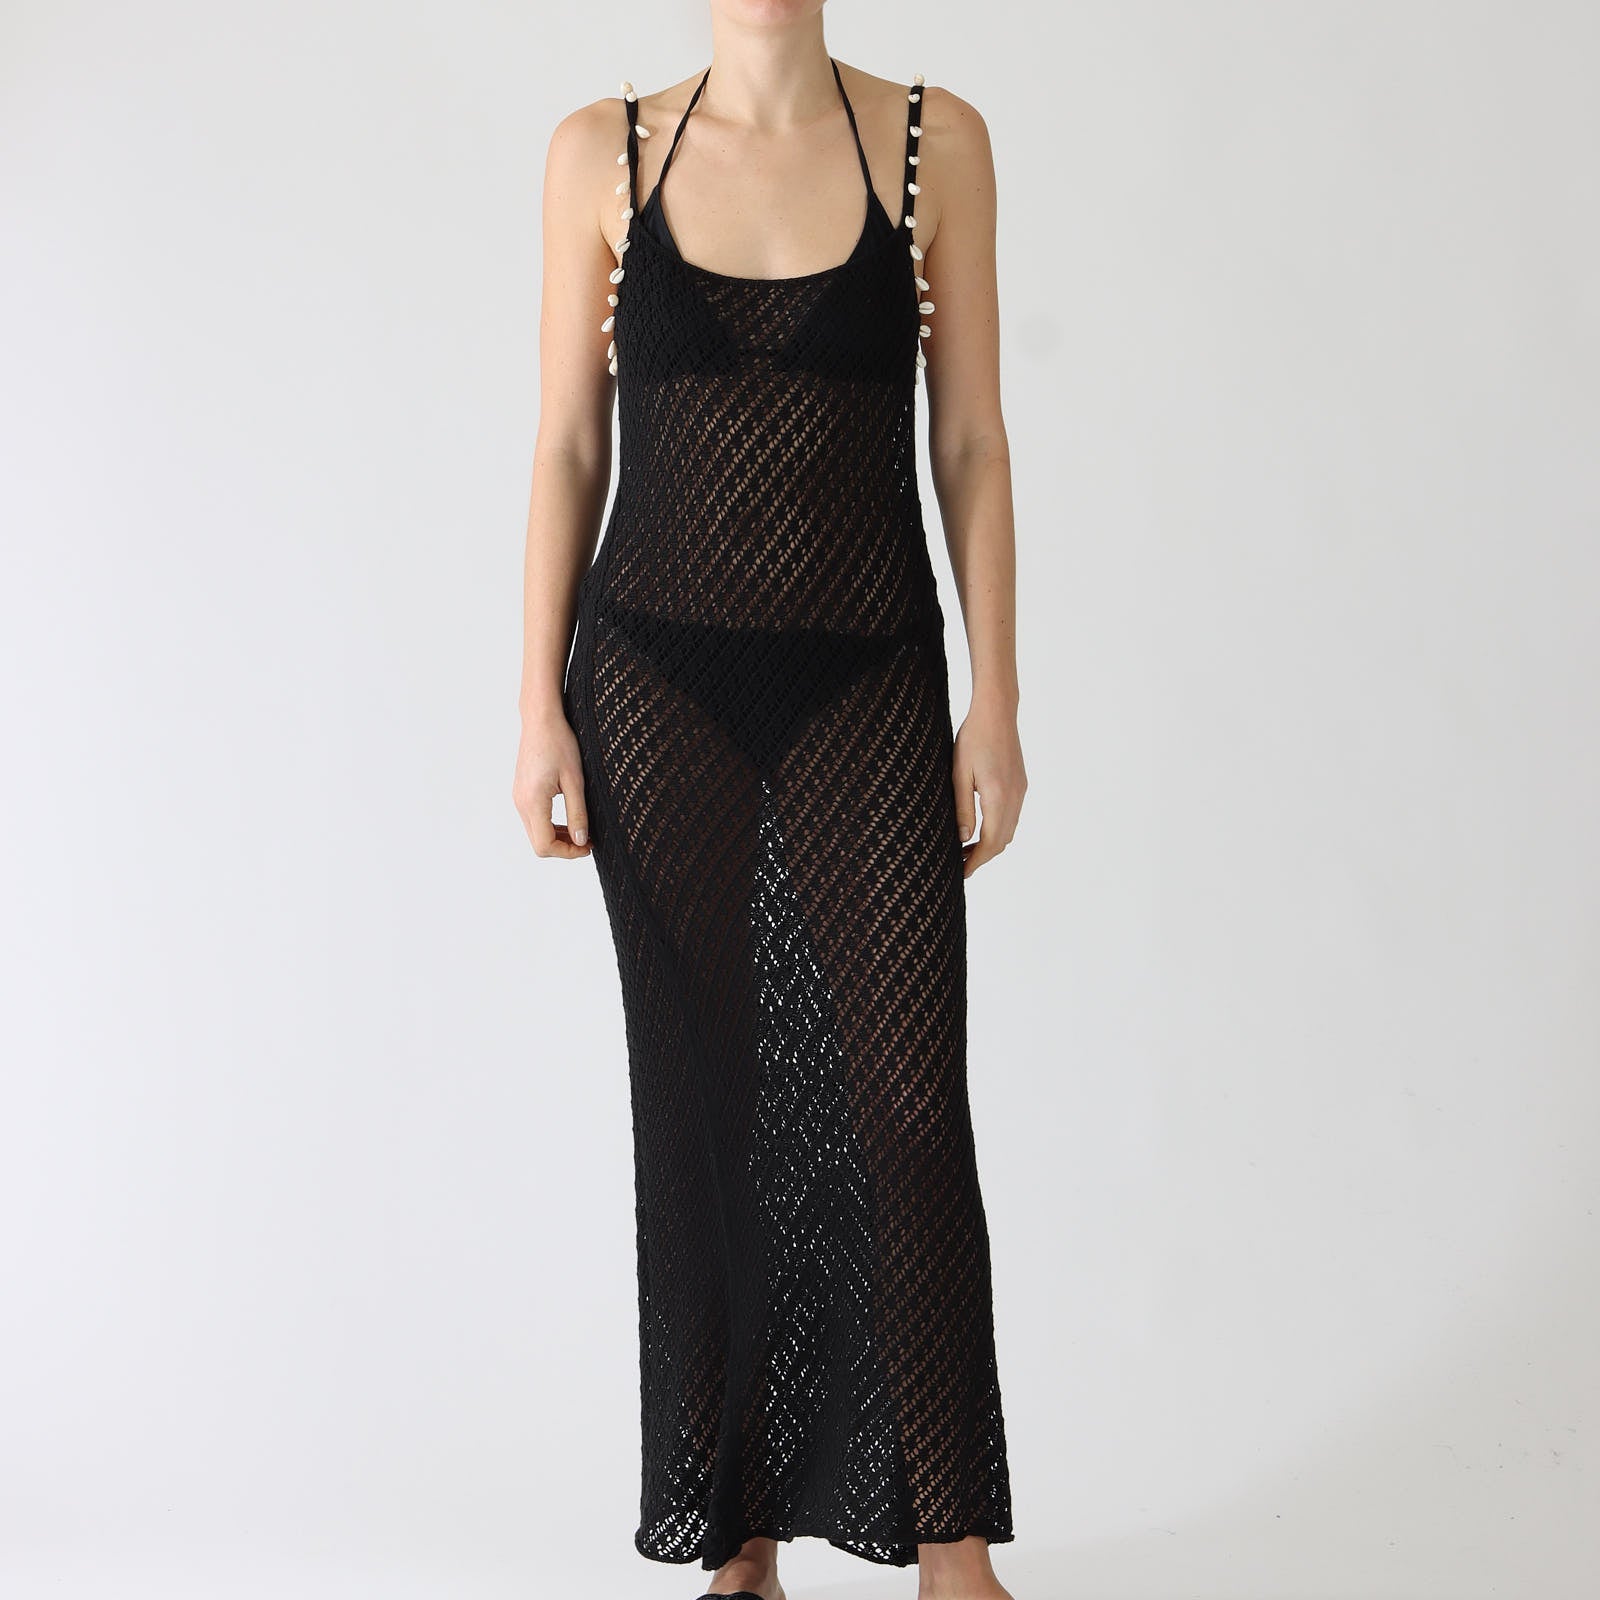 Black Puka Shell Crochet Dress